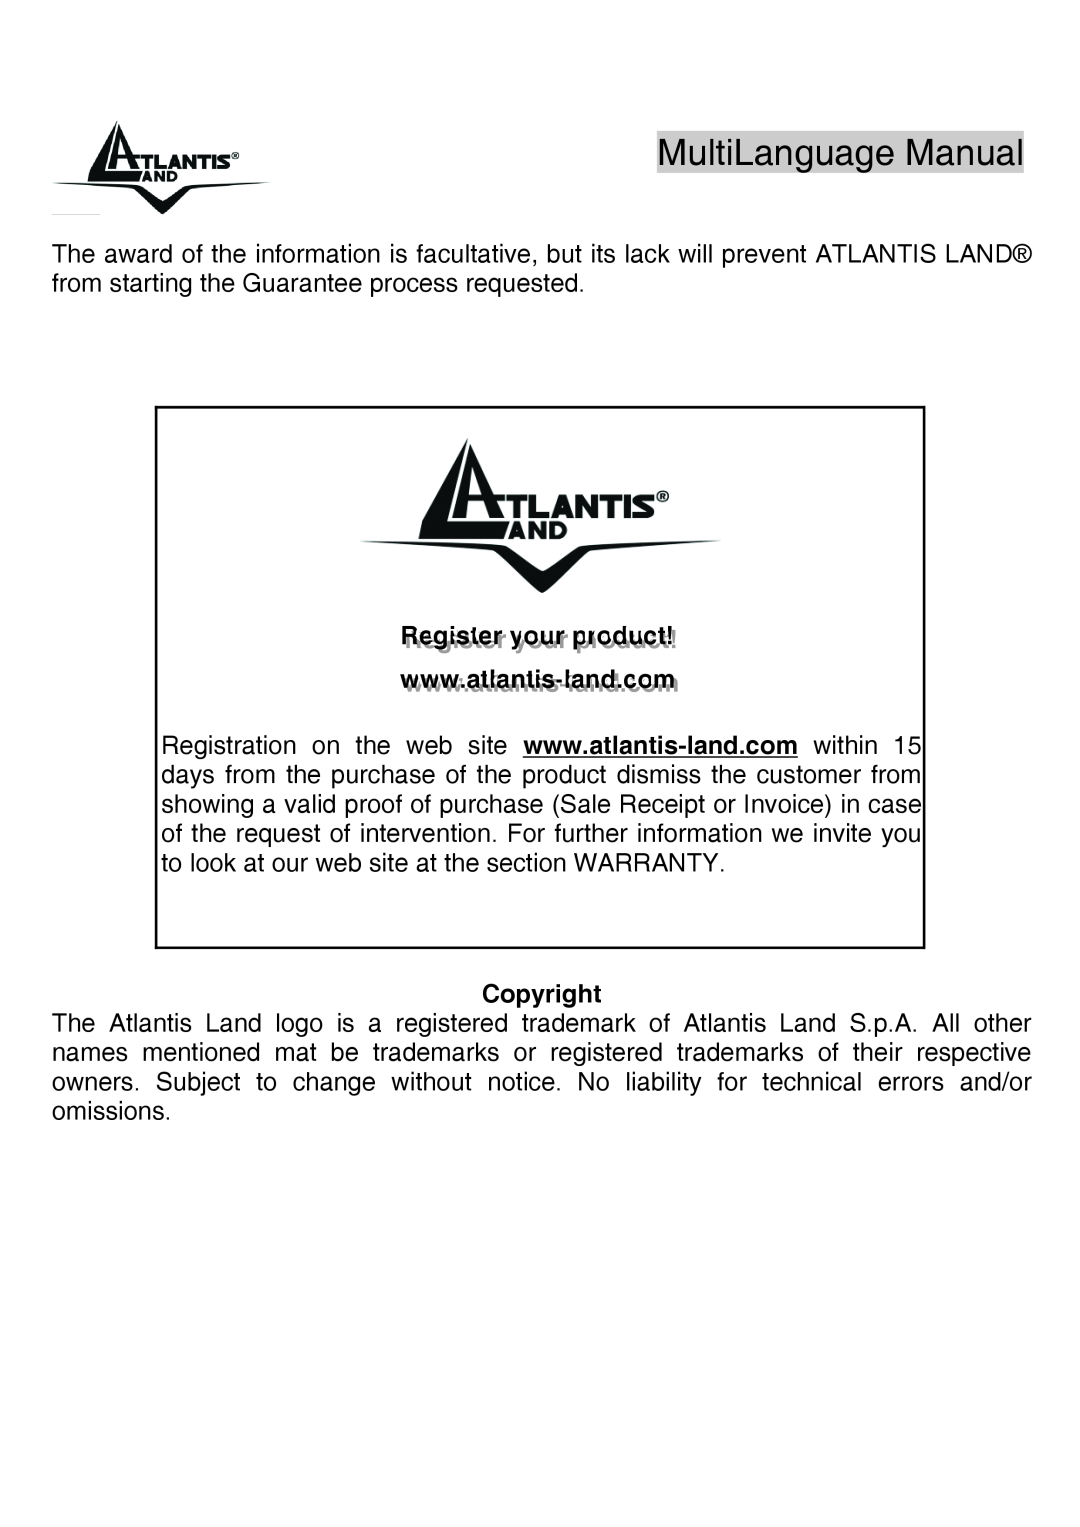 Atlantis Land A02-UP-W54 quick start MultiLanguage Manual Gu, Copyright 